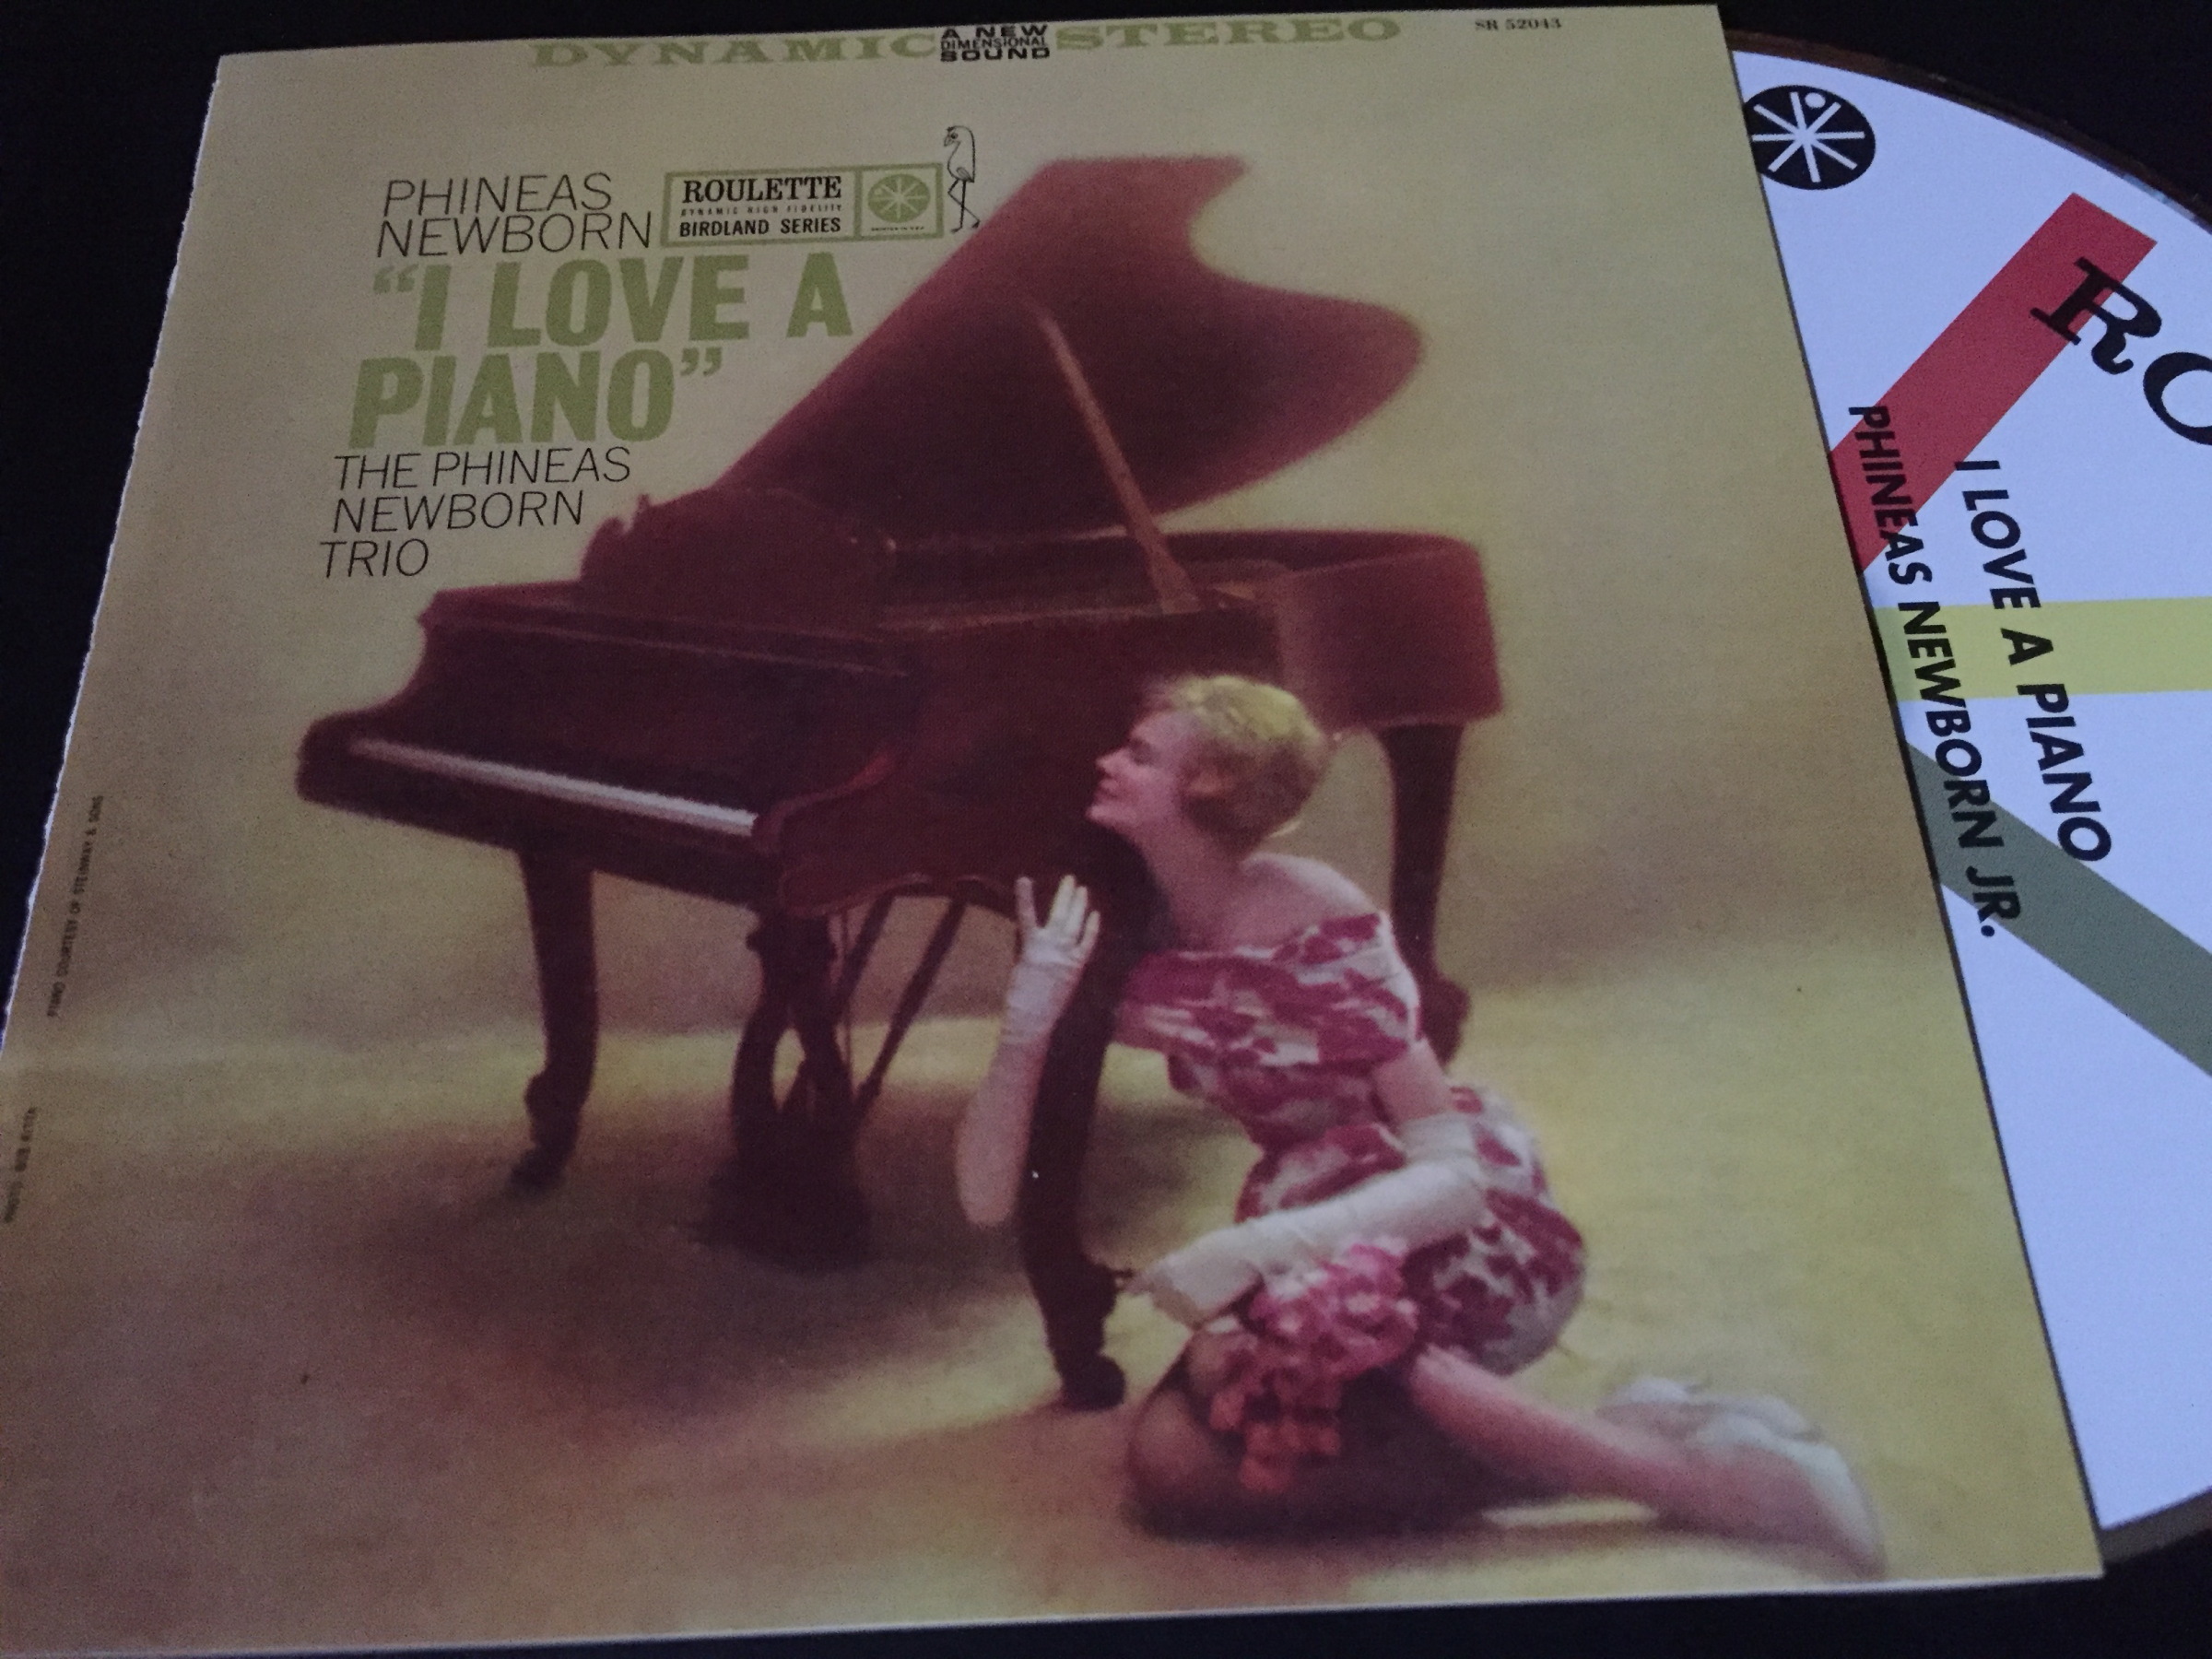 Phineas Newborn, Jr. / I Love A Piano: 日々JAZZ的な生活